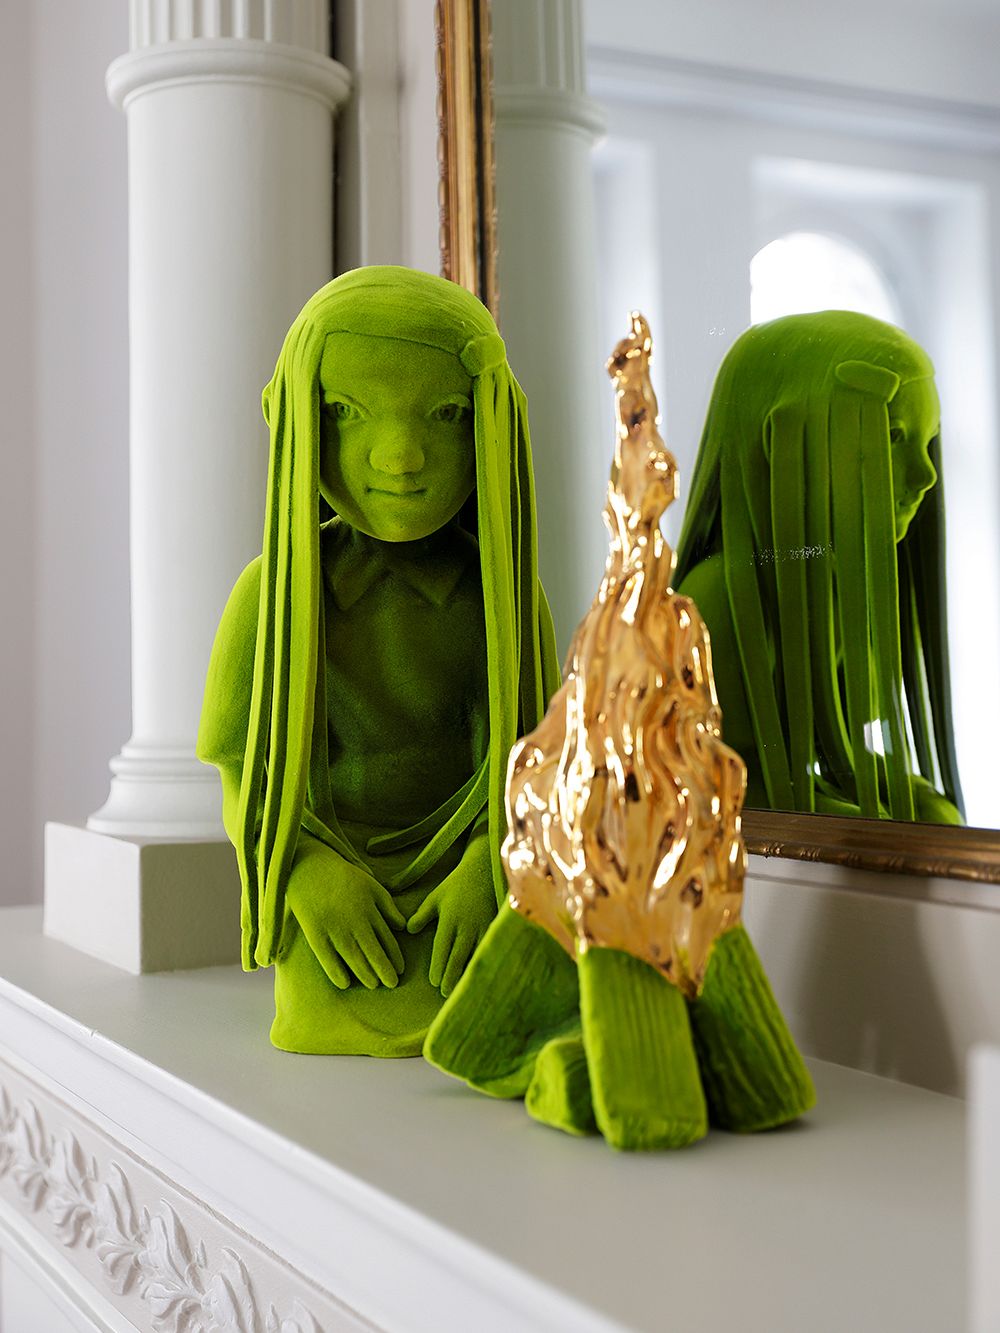 Kim Simonsson's sculpture Moss Girl and Fire